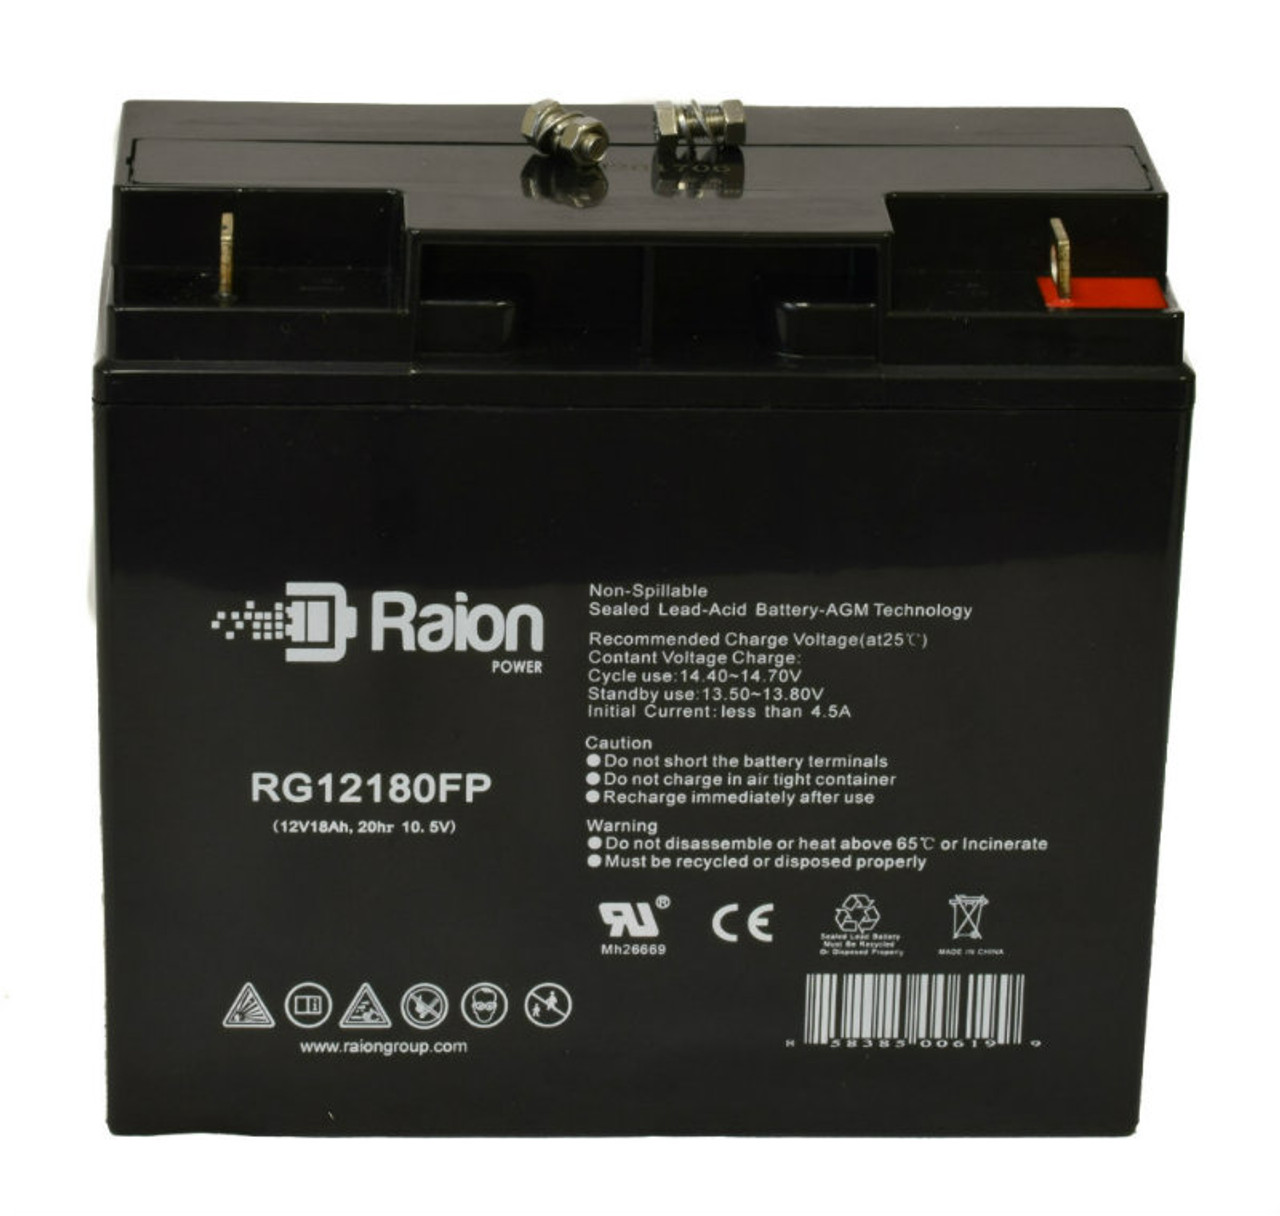 Raion Power RG12180FP 12V 18Ah Lead Acid Battery for KSTAR 6-FM-15